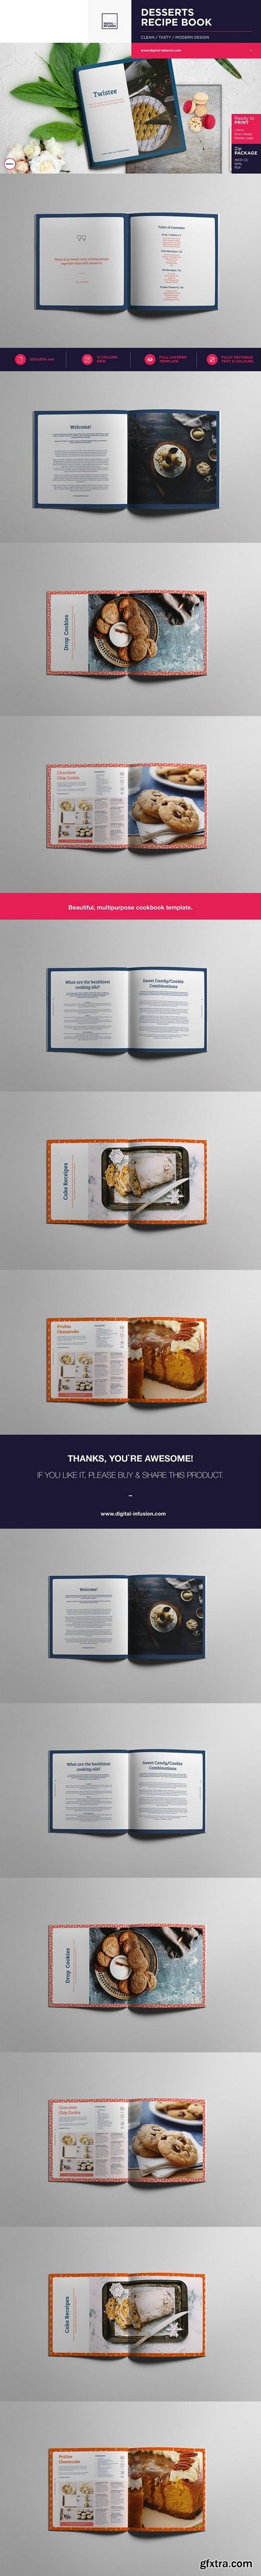 CM - Twistee — Desserts Recipe Book 1211849